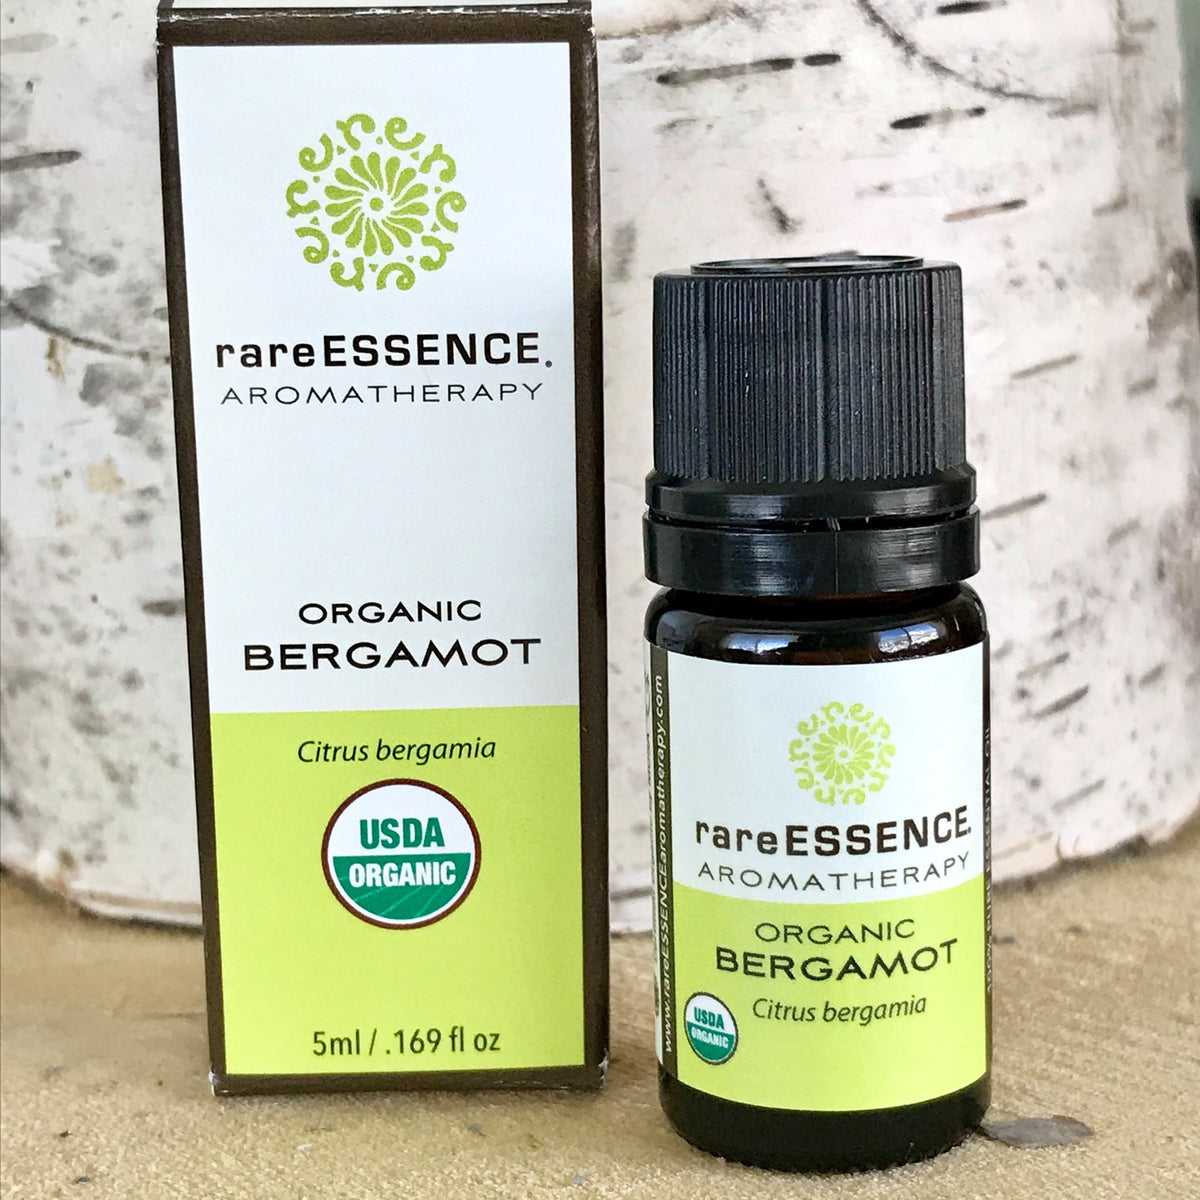 Bottle of organic bergamot essential oil by Rare Essence